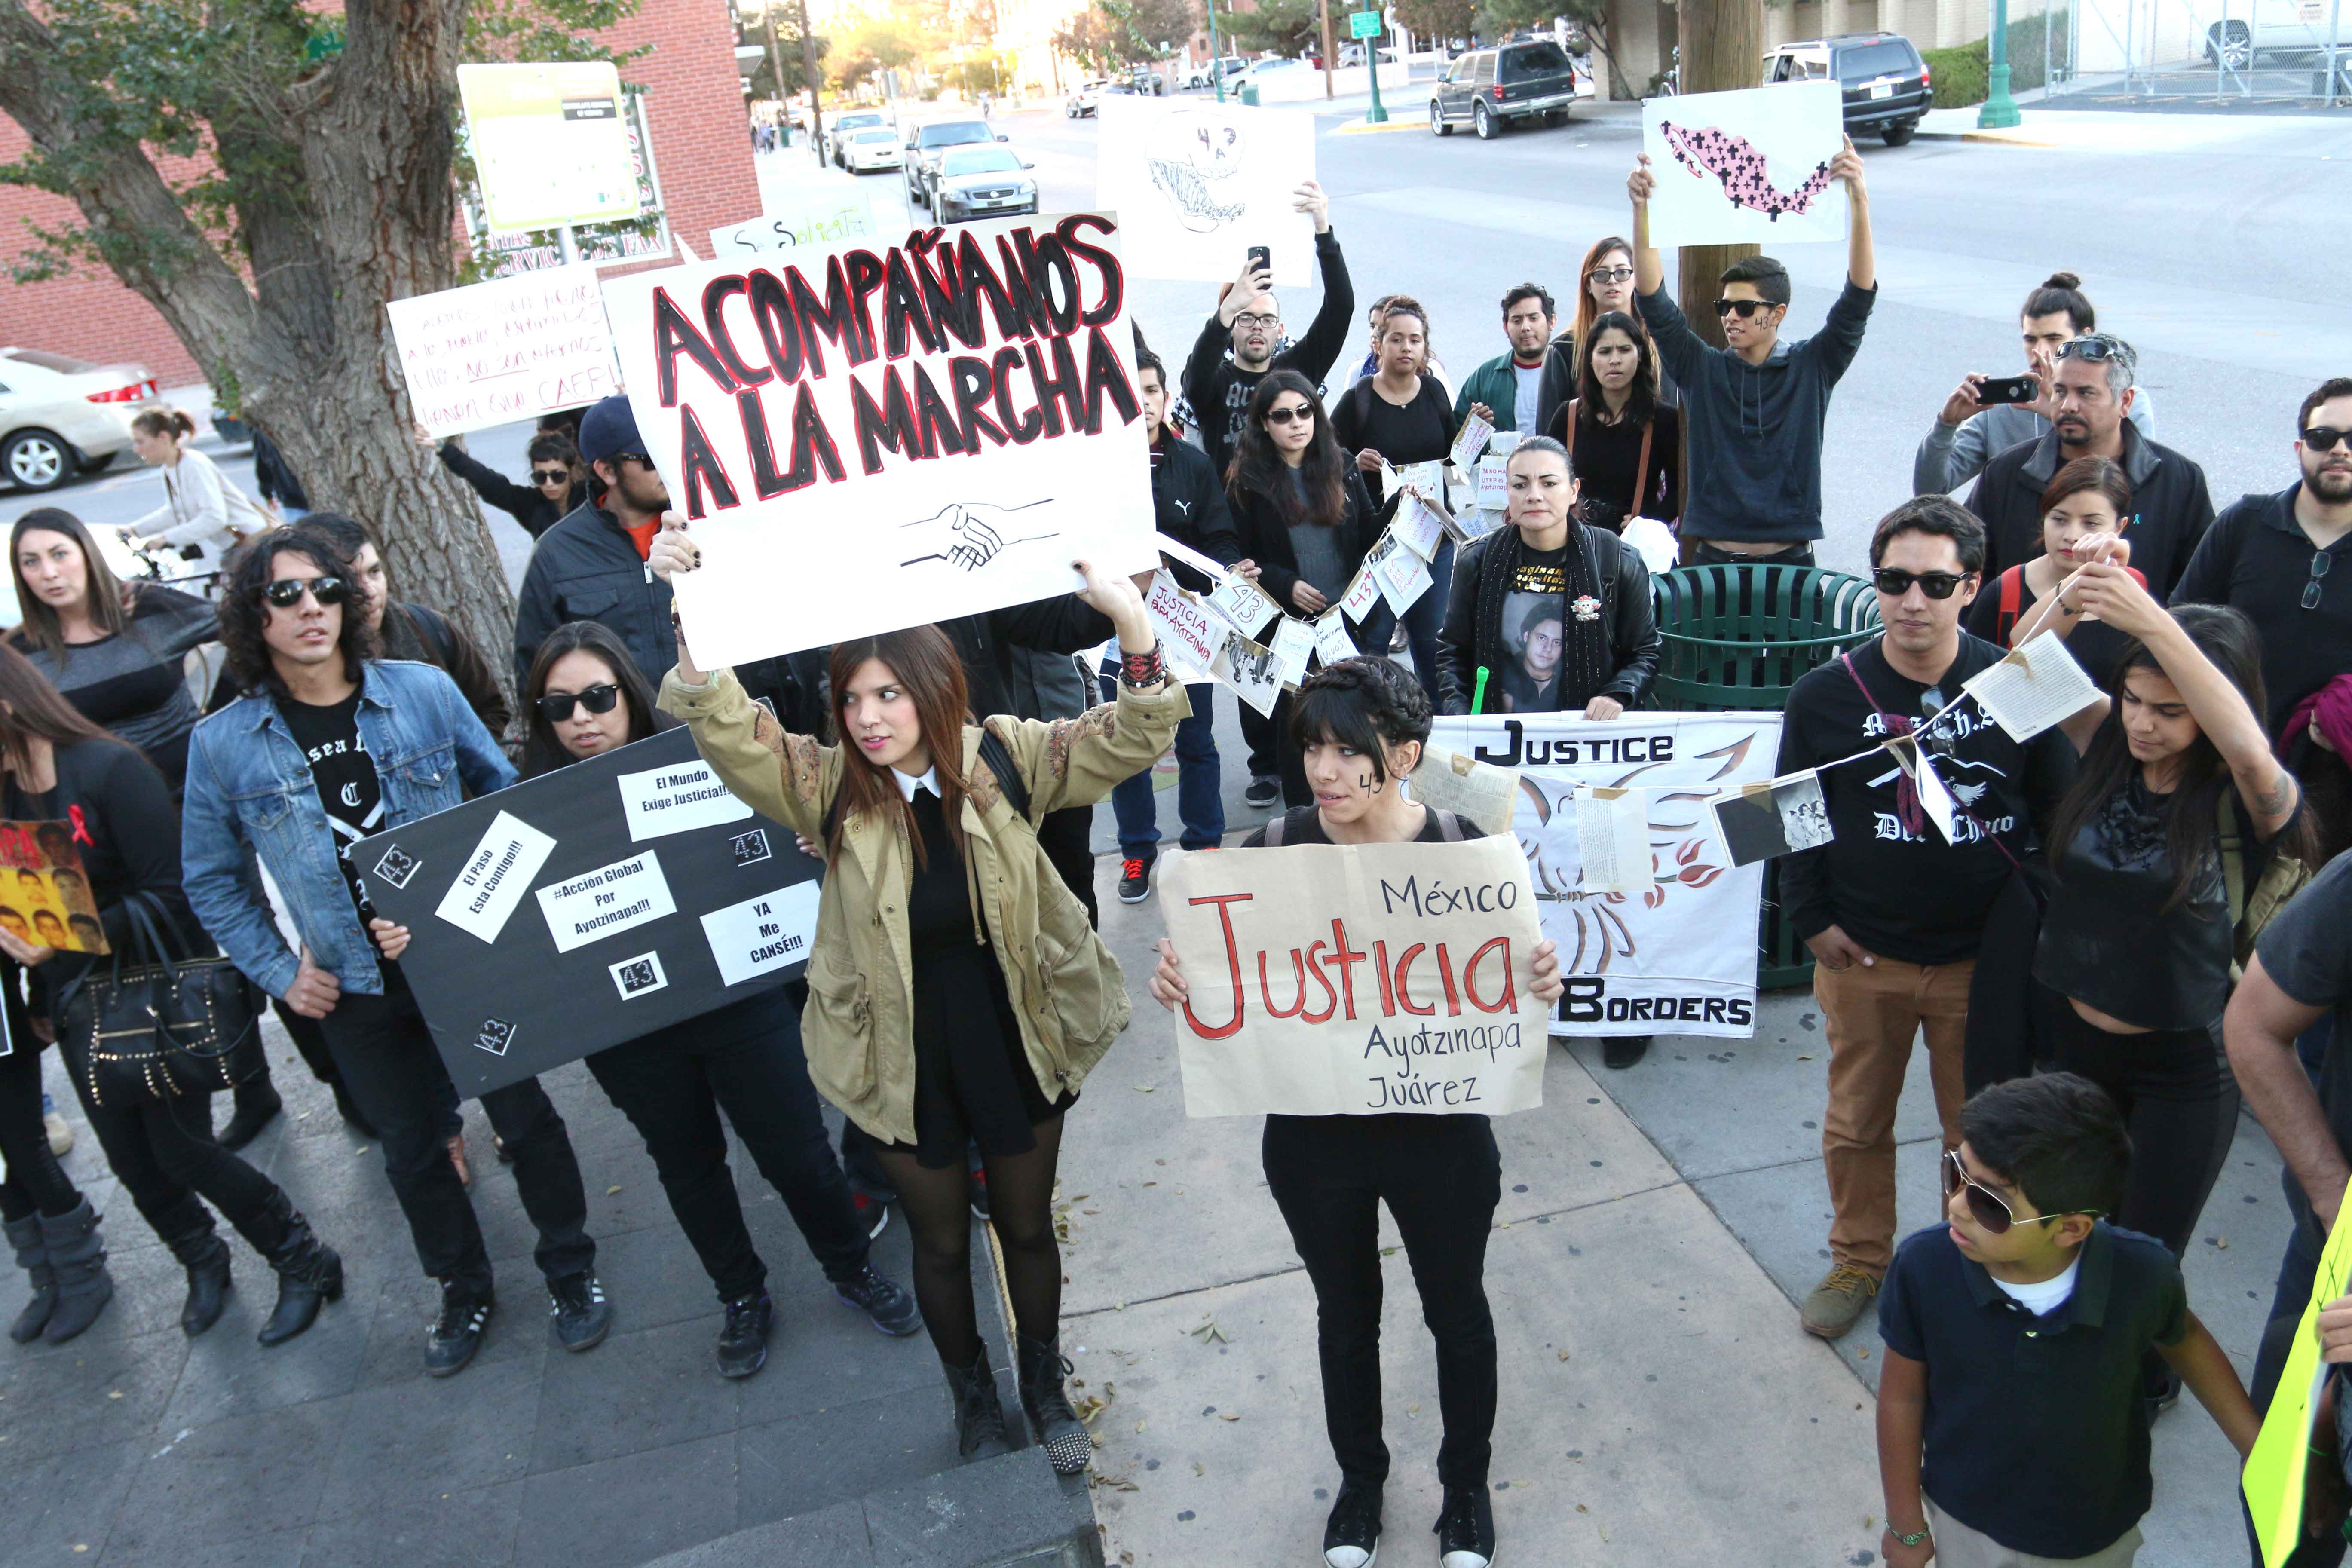 El+Pasoans+unite+for+missing+Ayotzinapa+students+